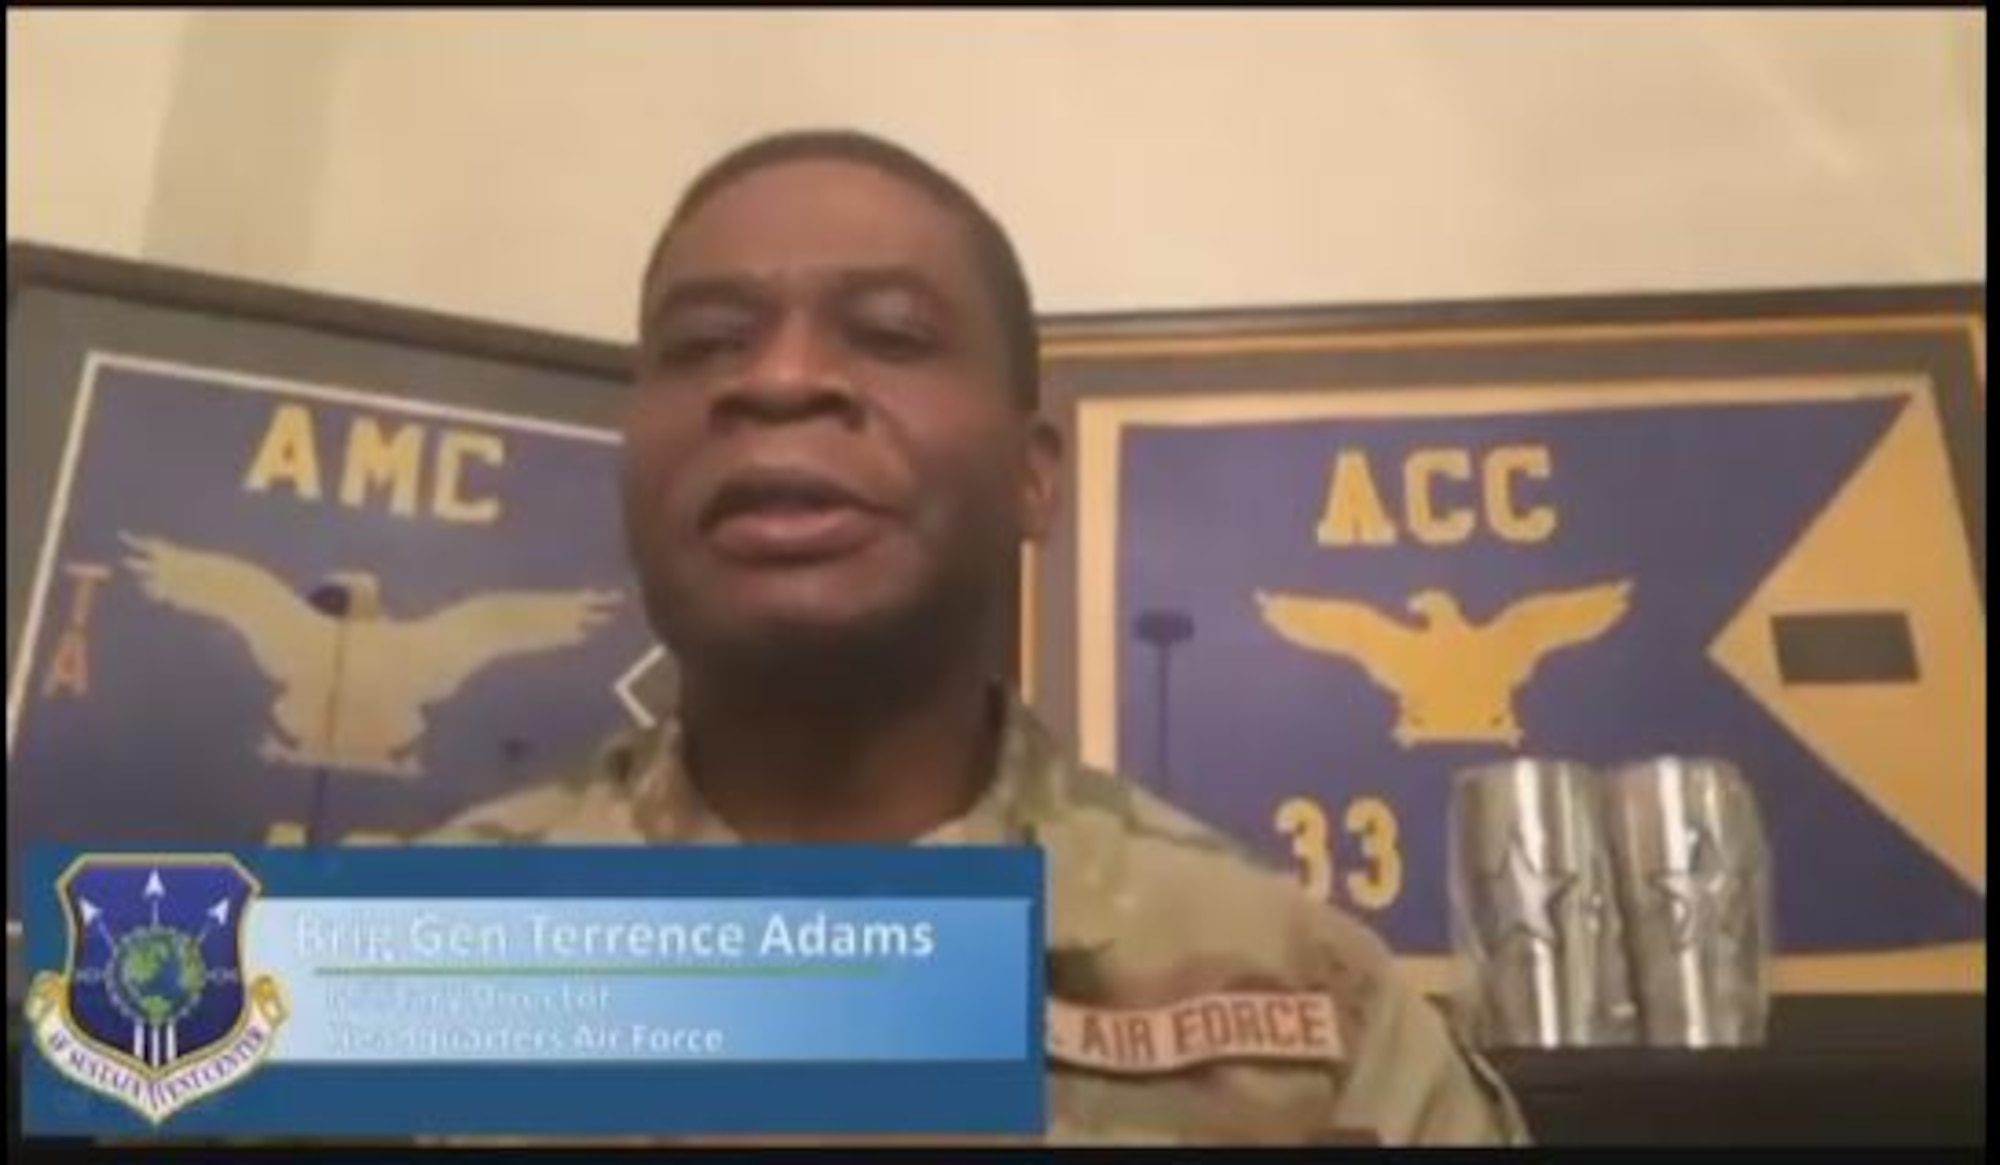 VIDEO: Brig Gen Terrence Adams Talks Mentoring